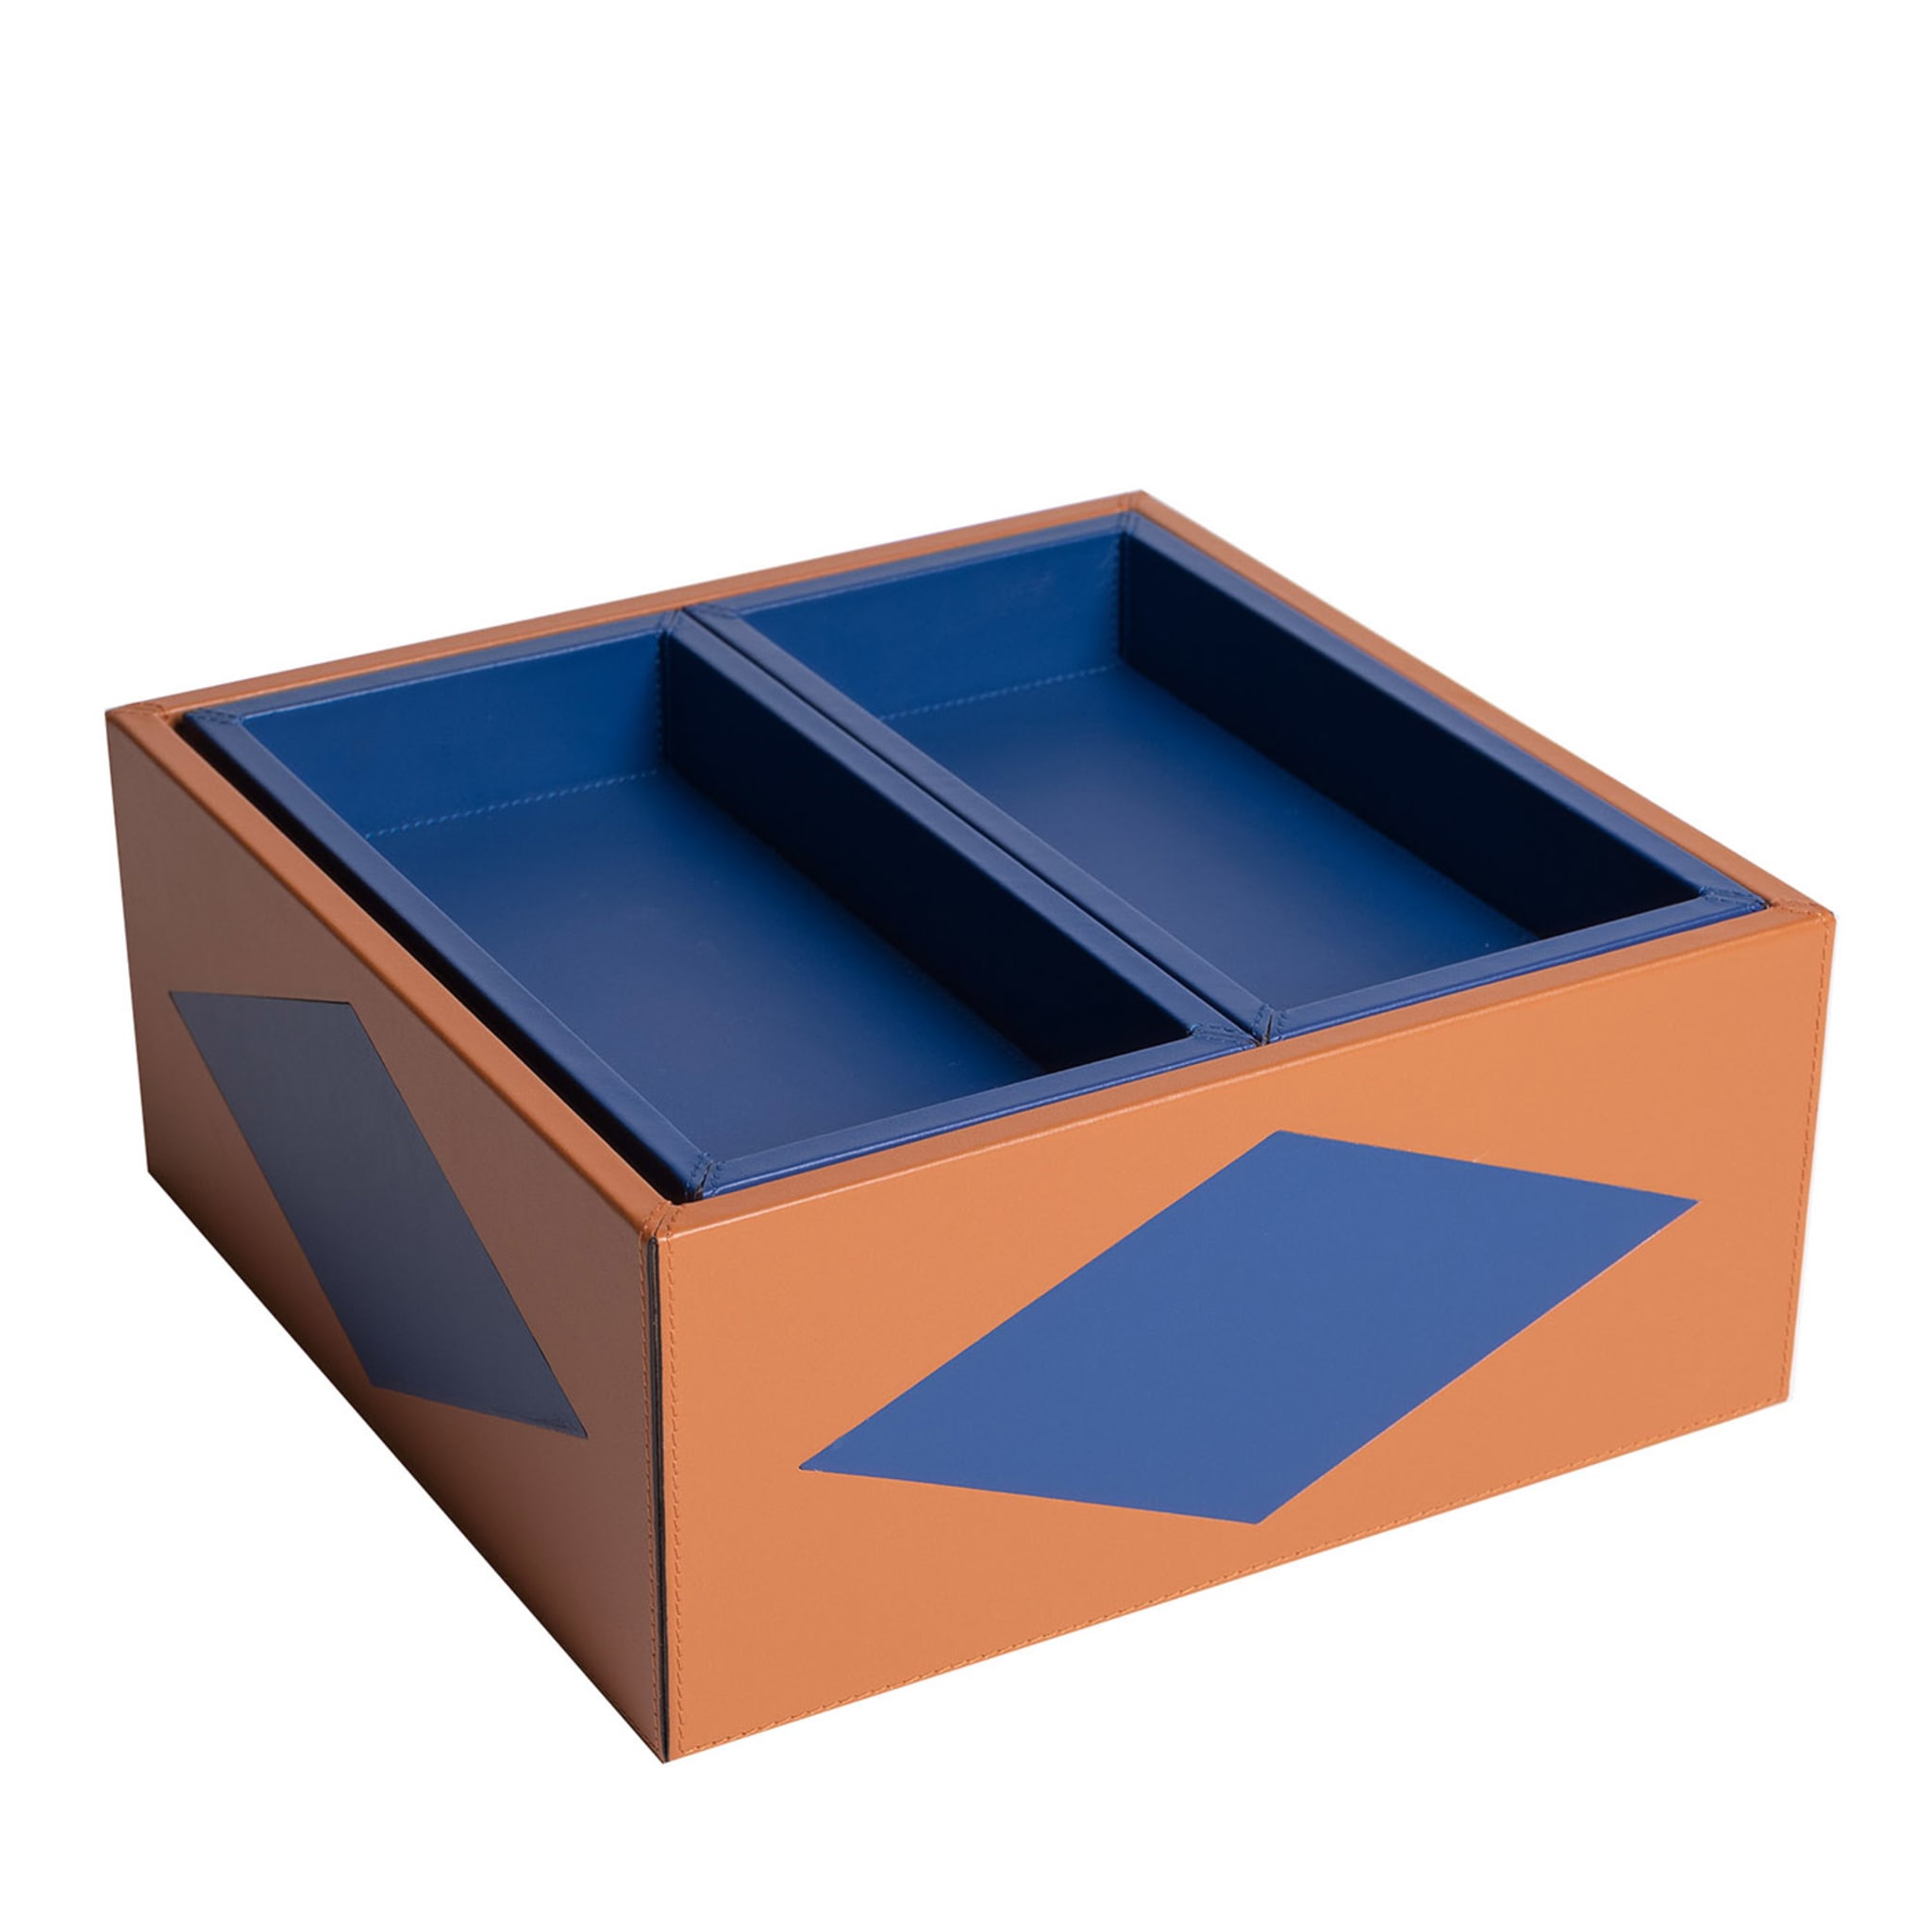 Intarsio Briolette Pecan and Ocean Blue Duo Box - Main view